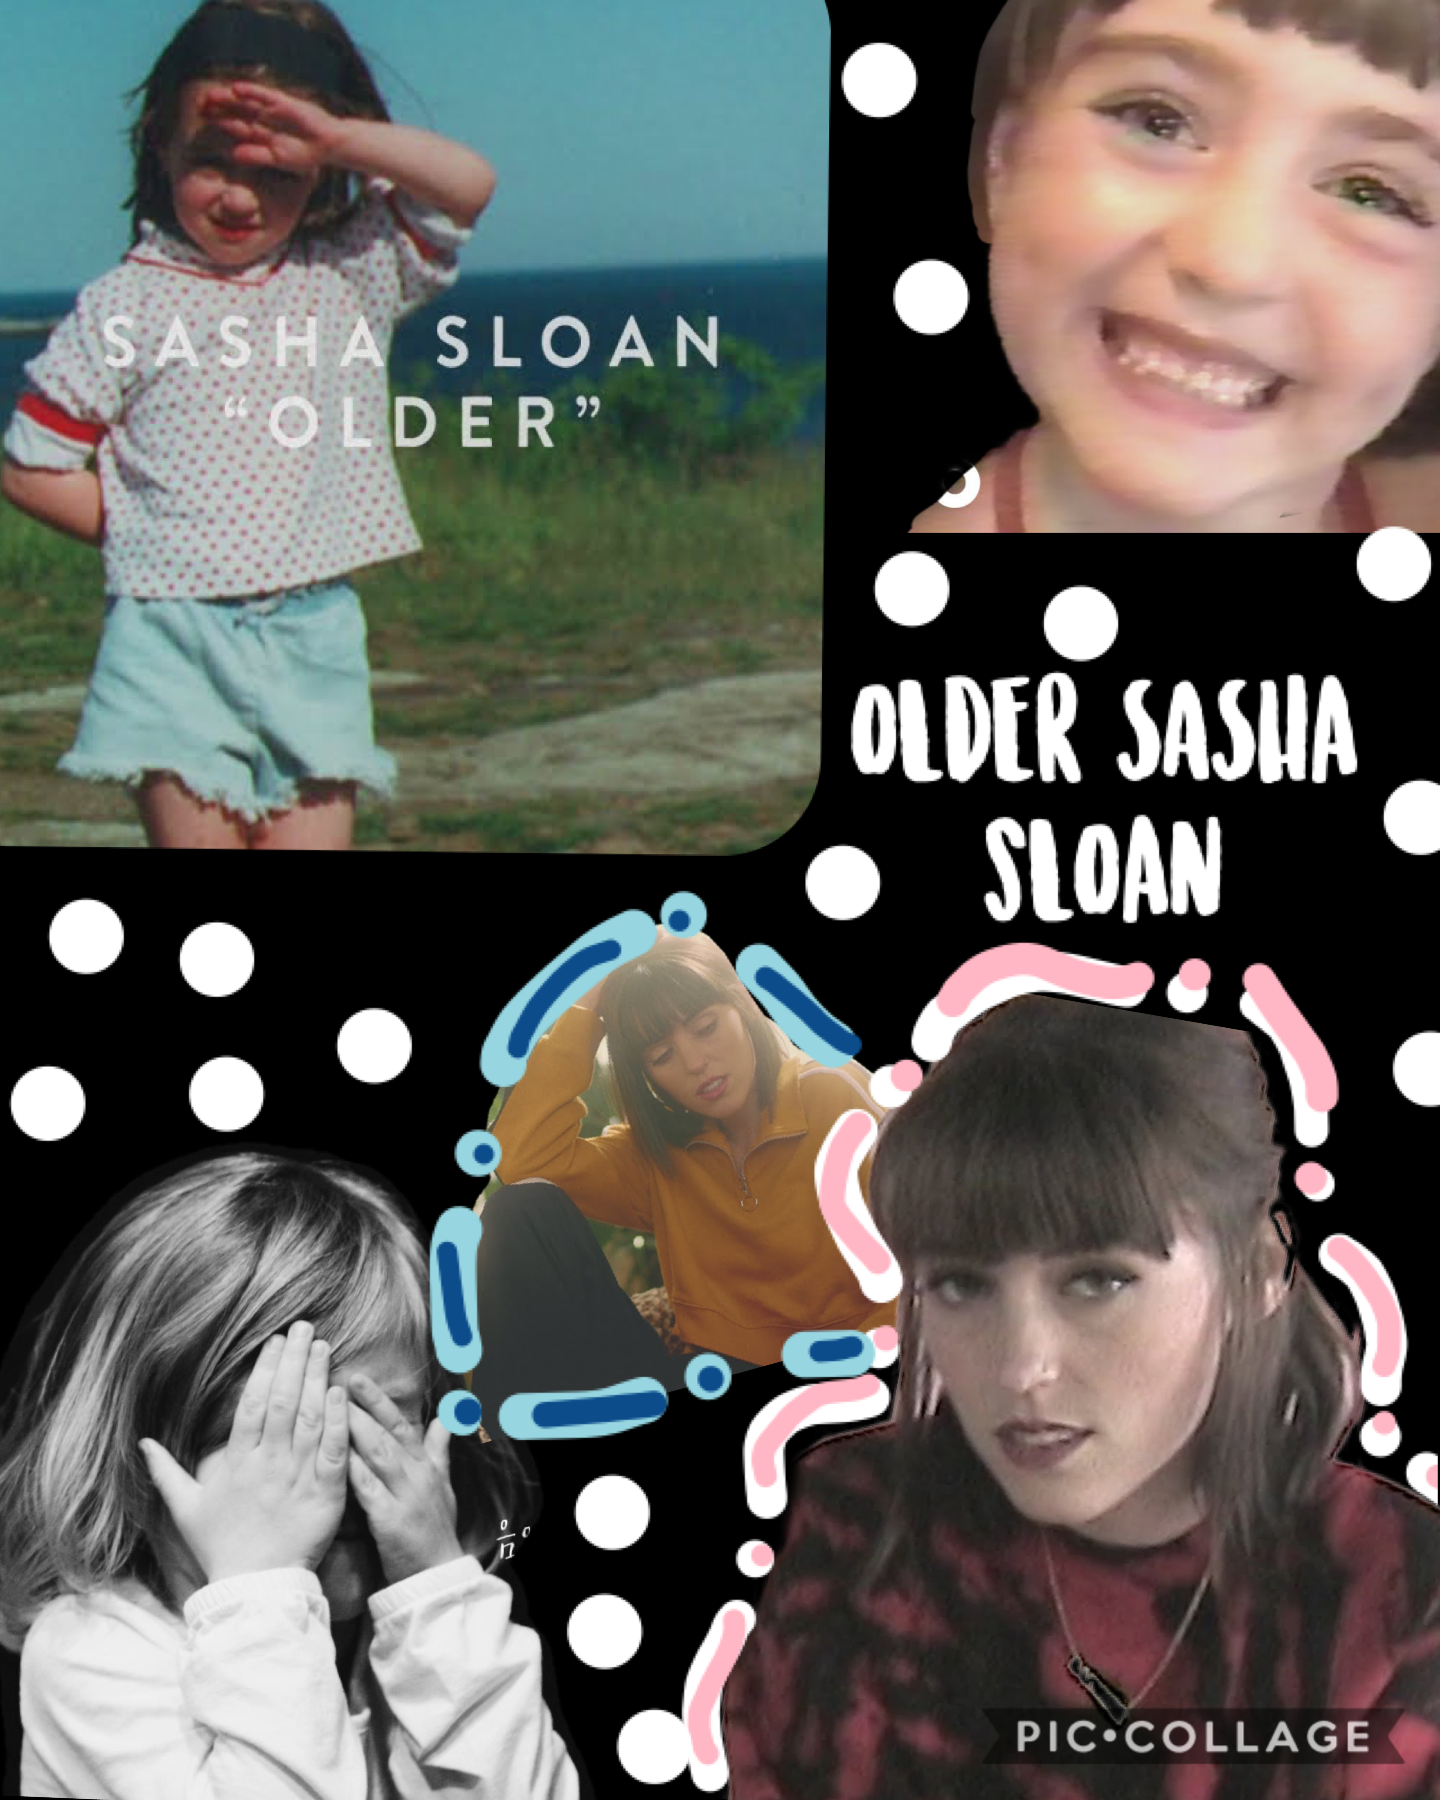 I luv older by Sasha Sloan 